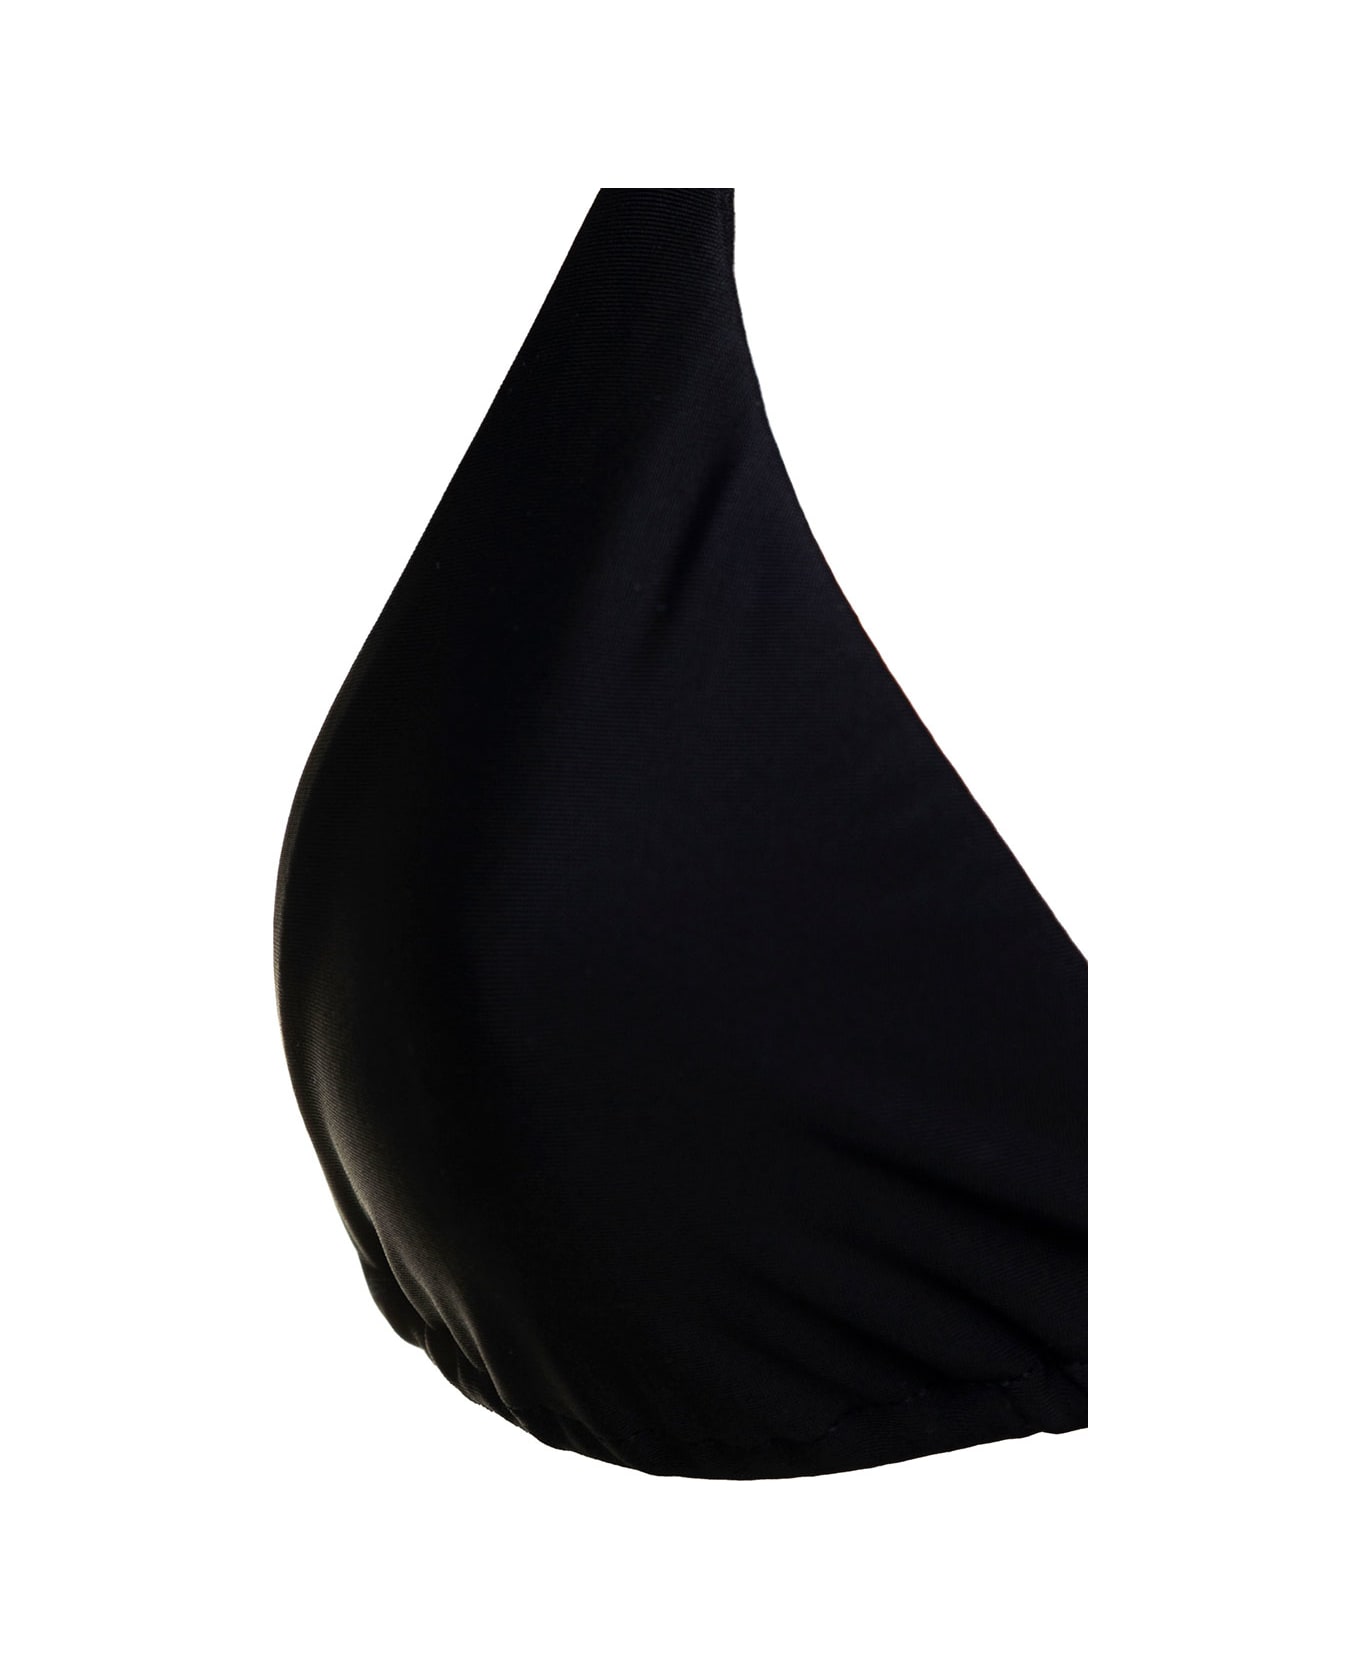 MATTEAU Woman's Tringolar Stretch Fabric Bikini Top - Black 水着